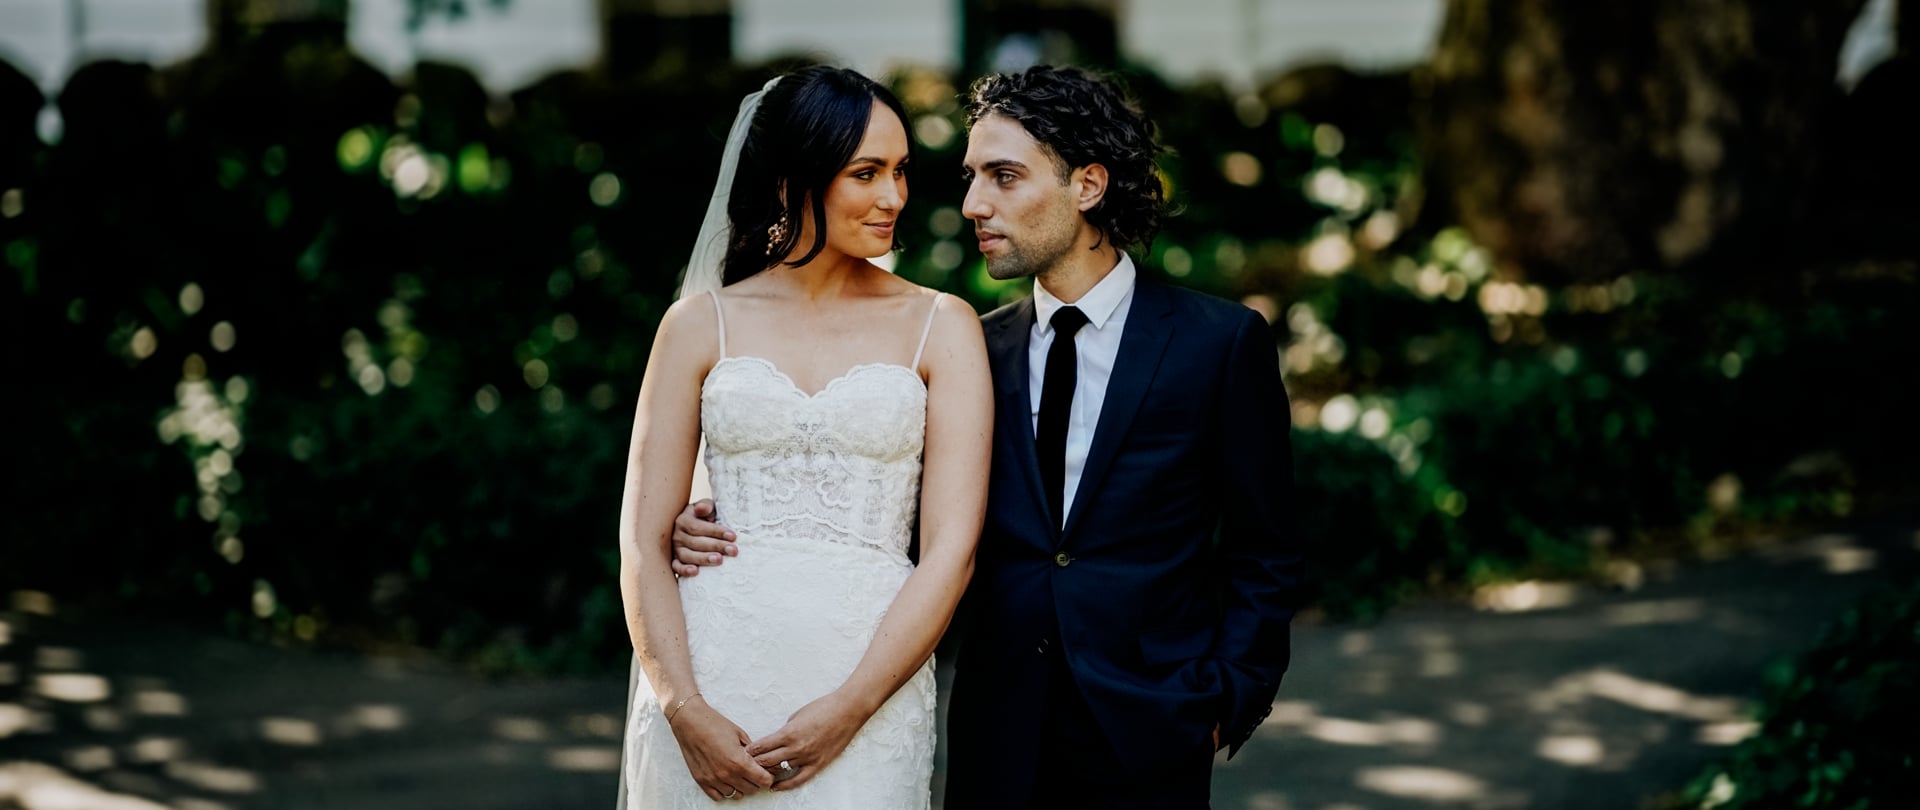 Katrina & Stefano Wedding Video Filmed at Melbourne, Victoria